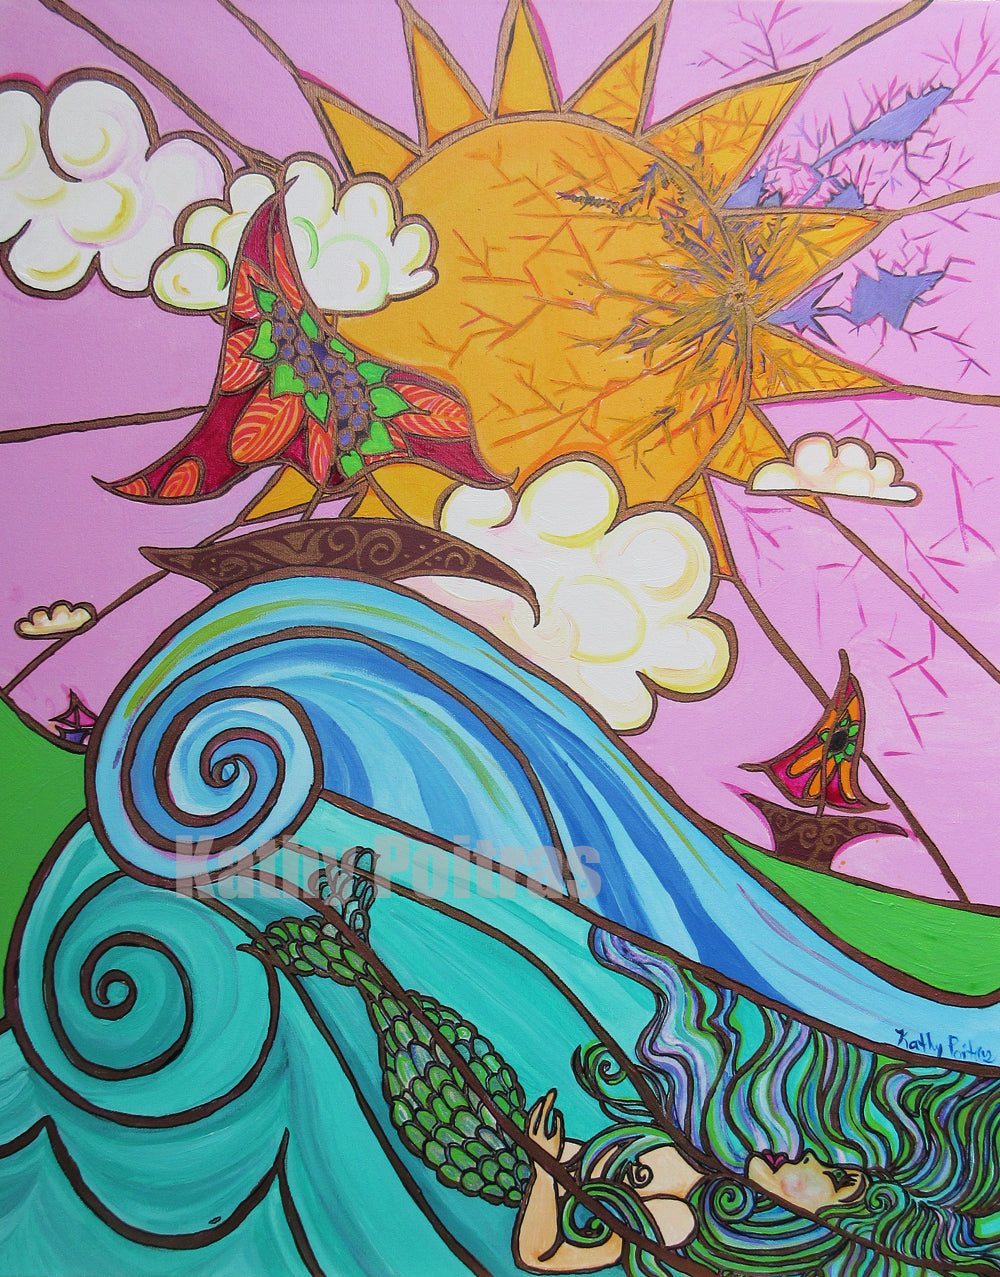 Dramatic Acrylic Painitng With Fantasy Sail Boats And A Mermaid